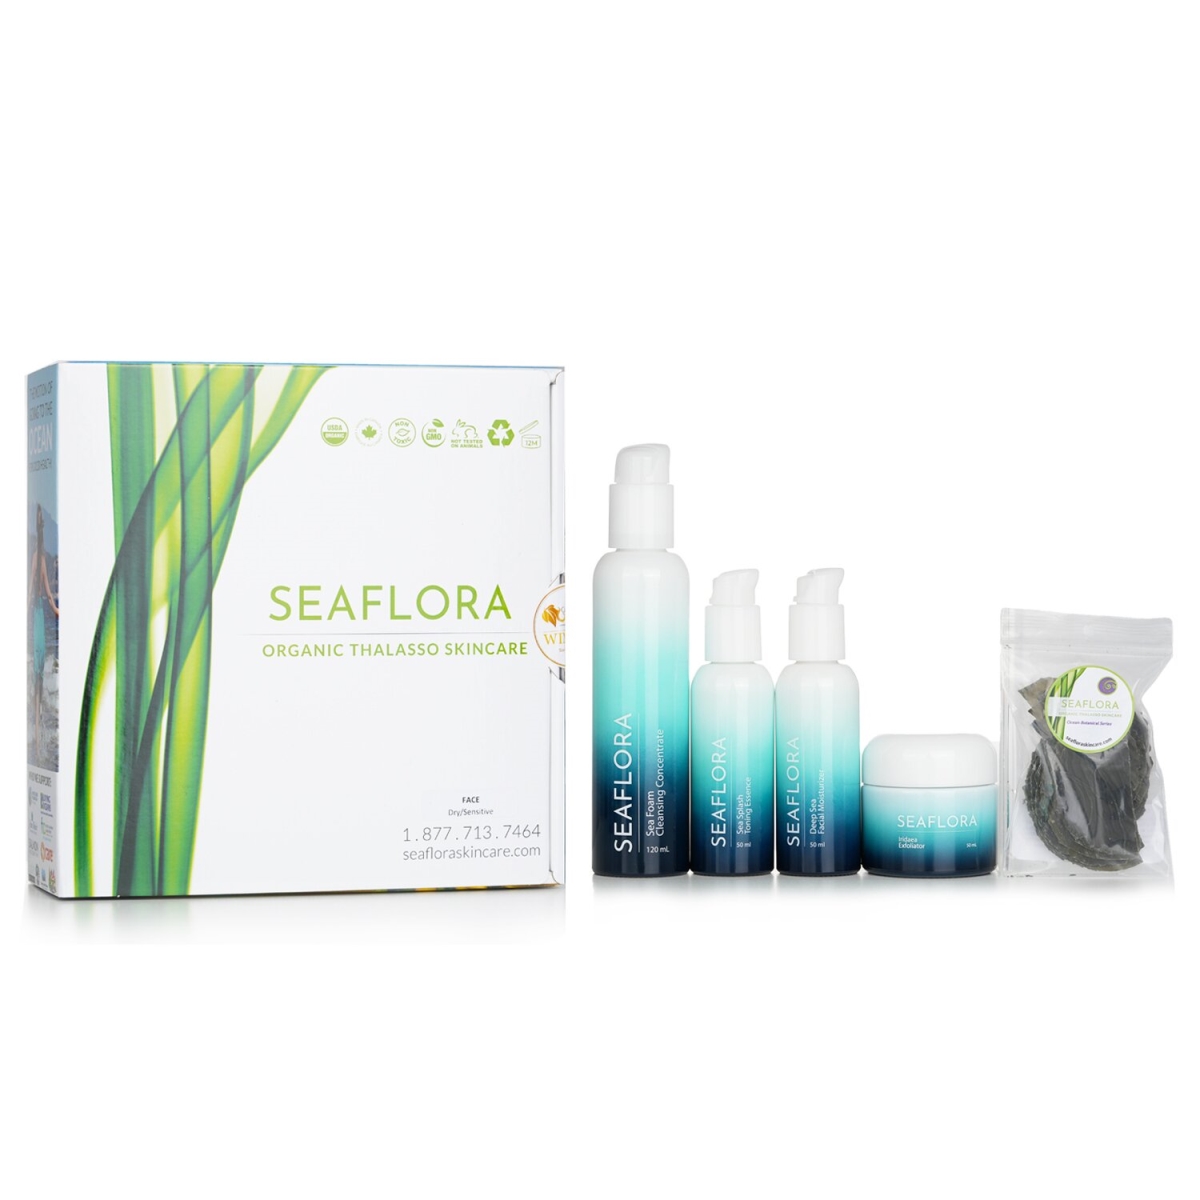 Picture of Seaflora 279870 Organic Thalasso Skincare Gift Set - 5 Piece